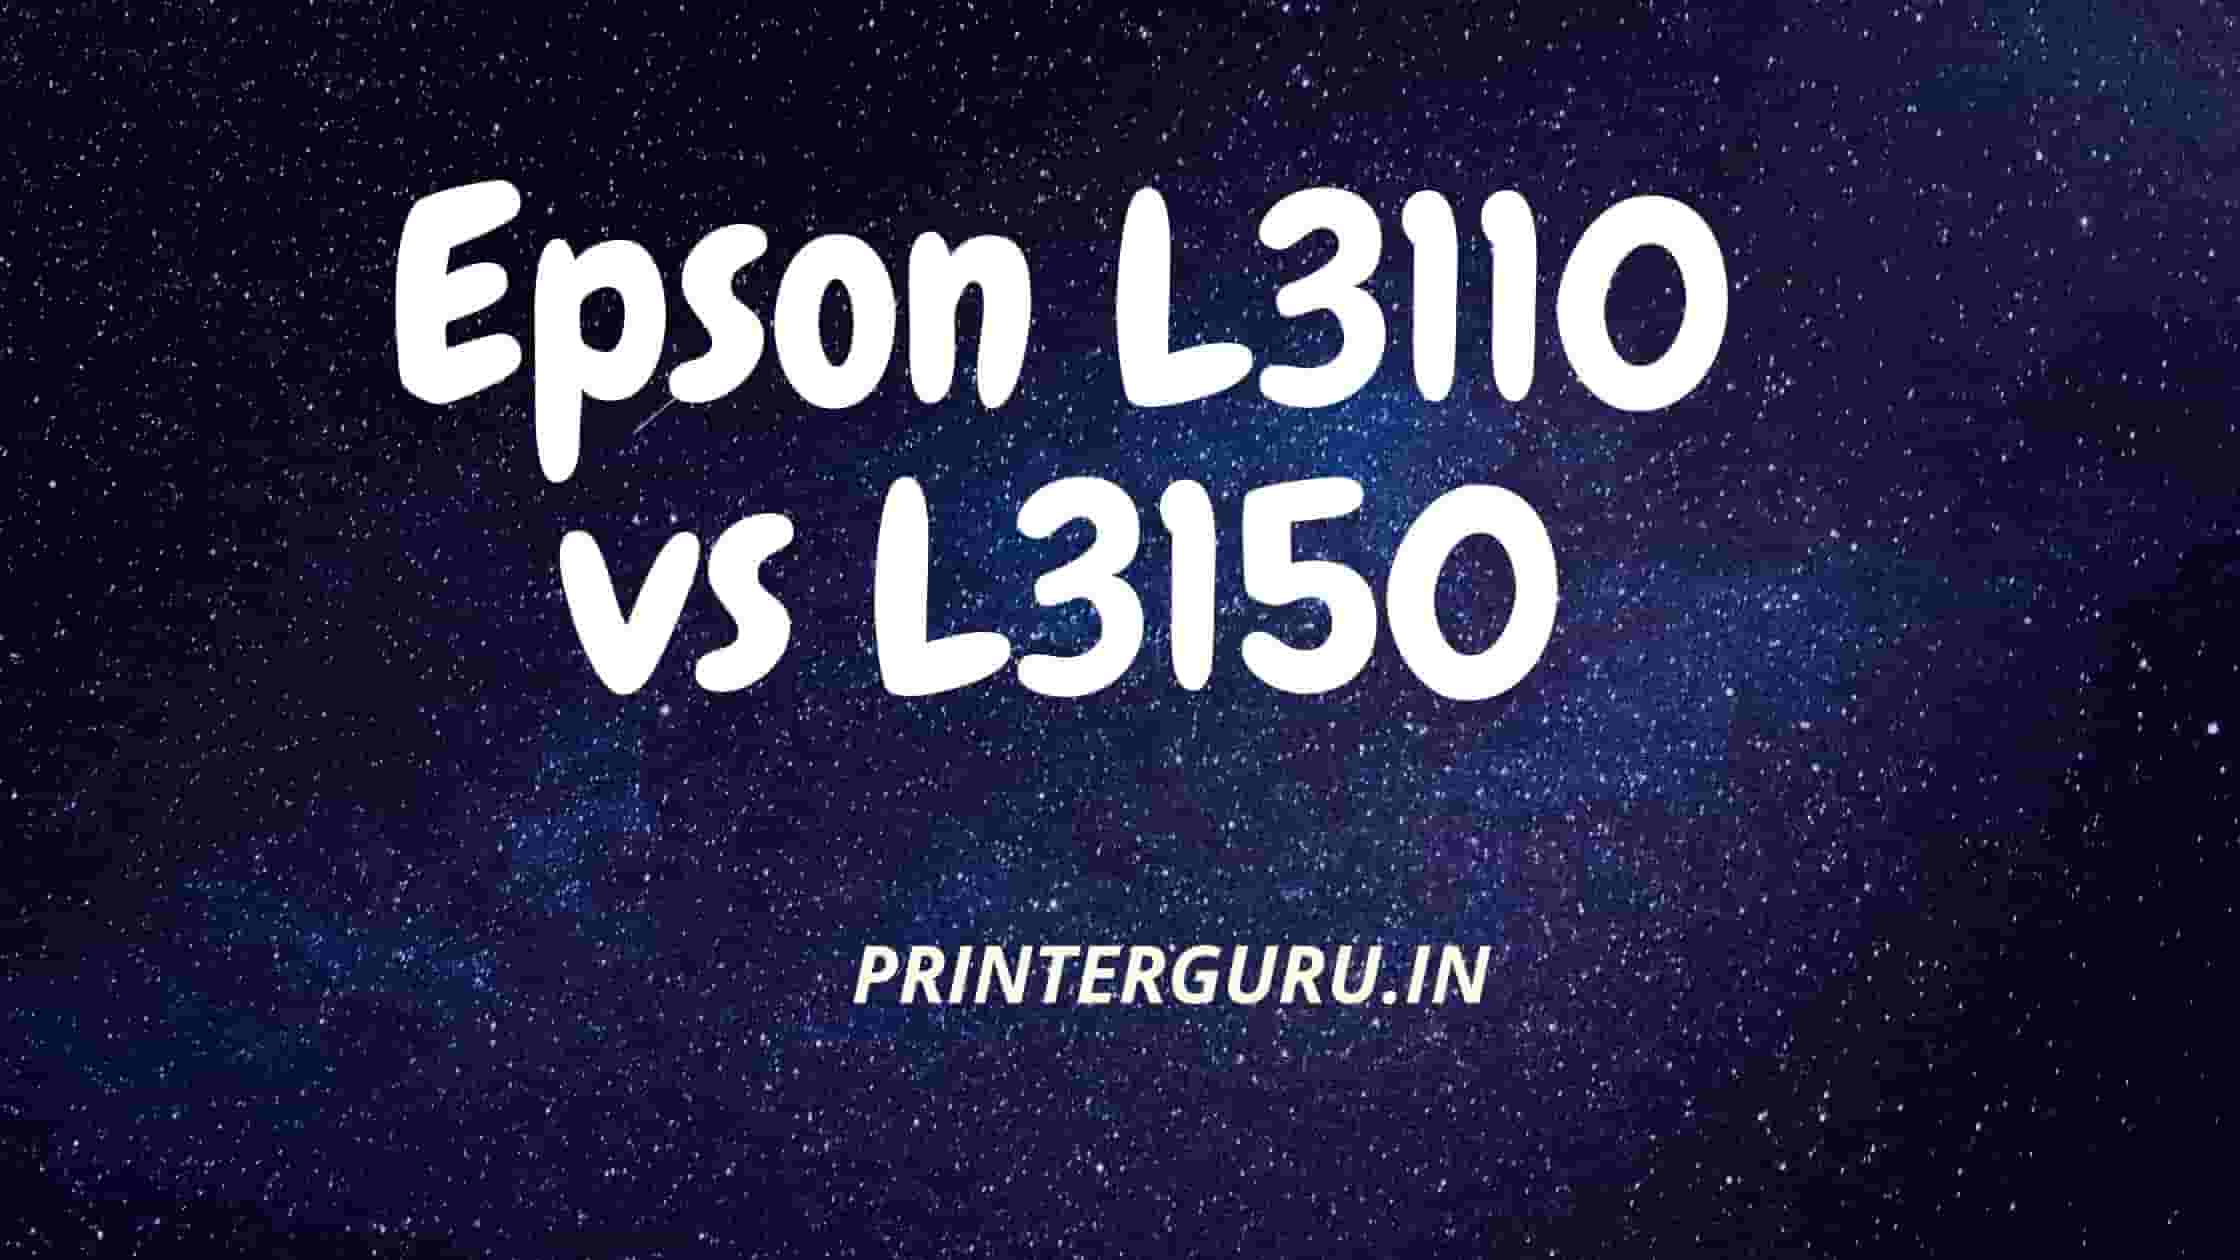 Epson L3110 vs L3150